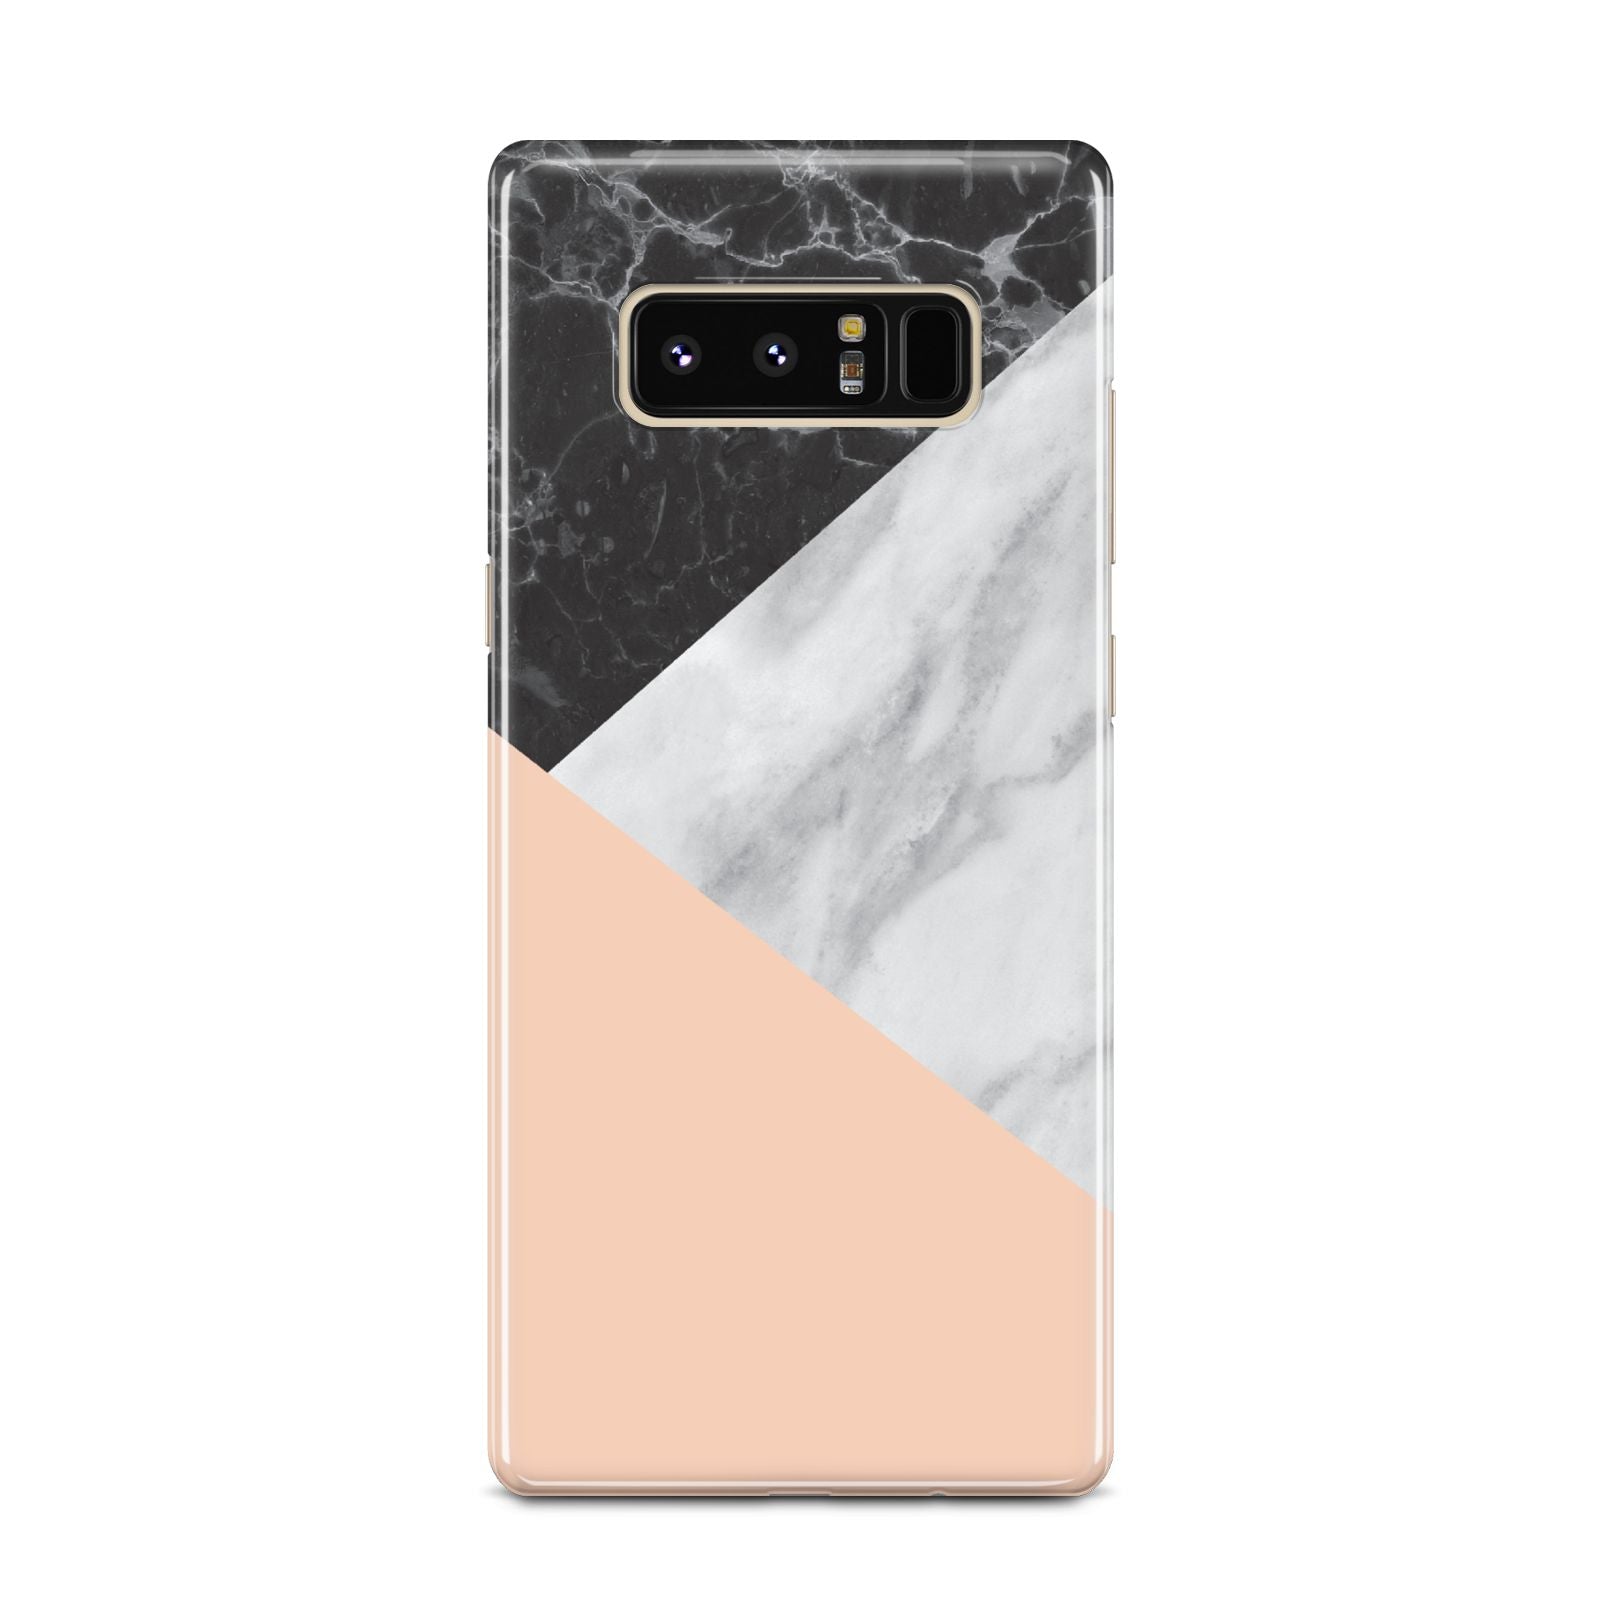 Marble Black White Grey Peach Samsung Galaxy Note 8 Case